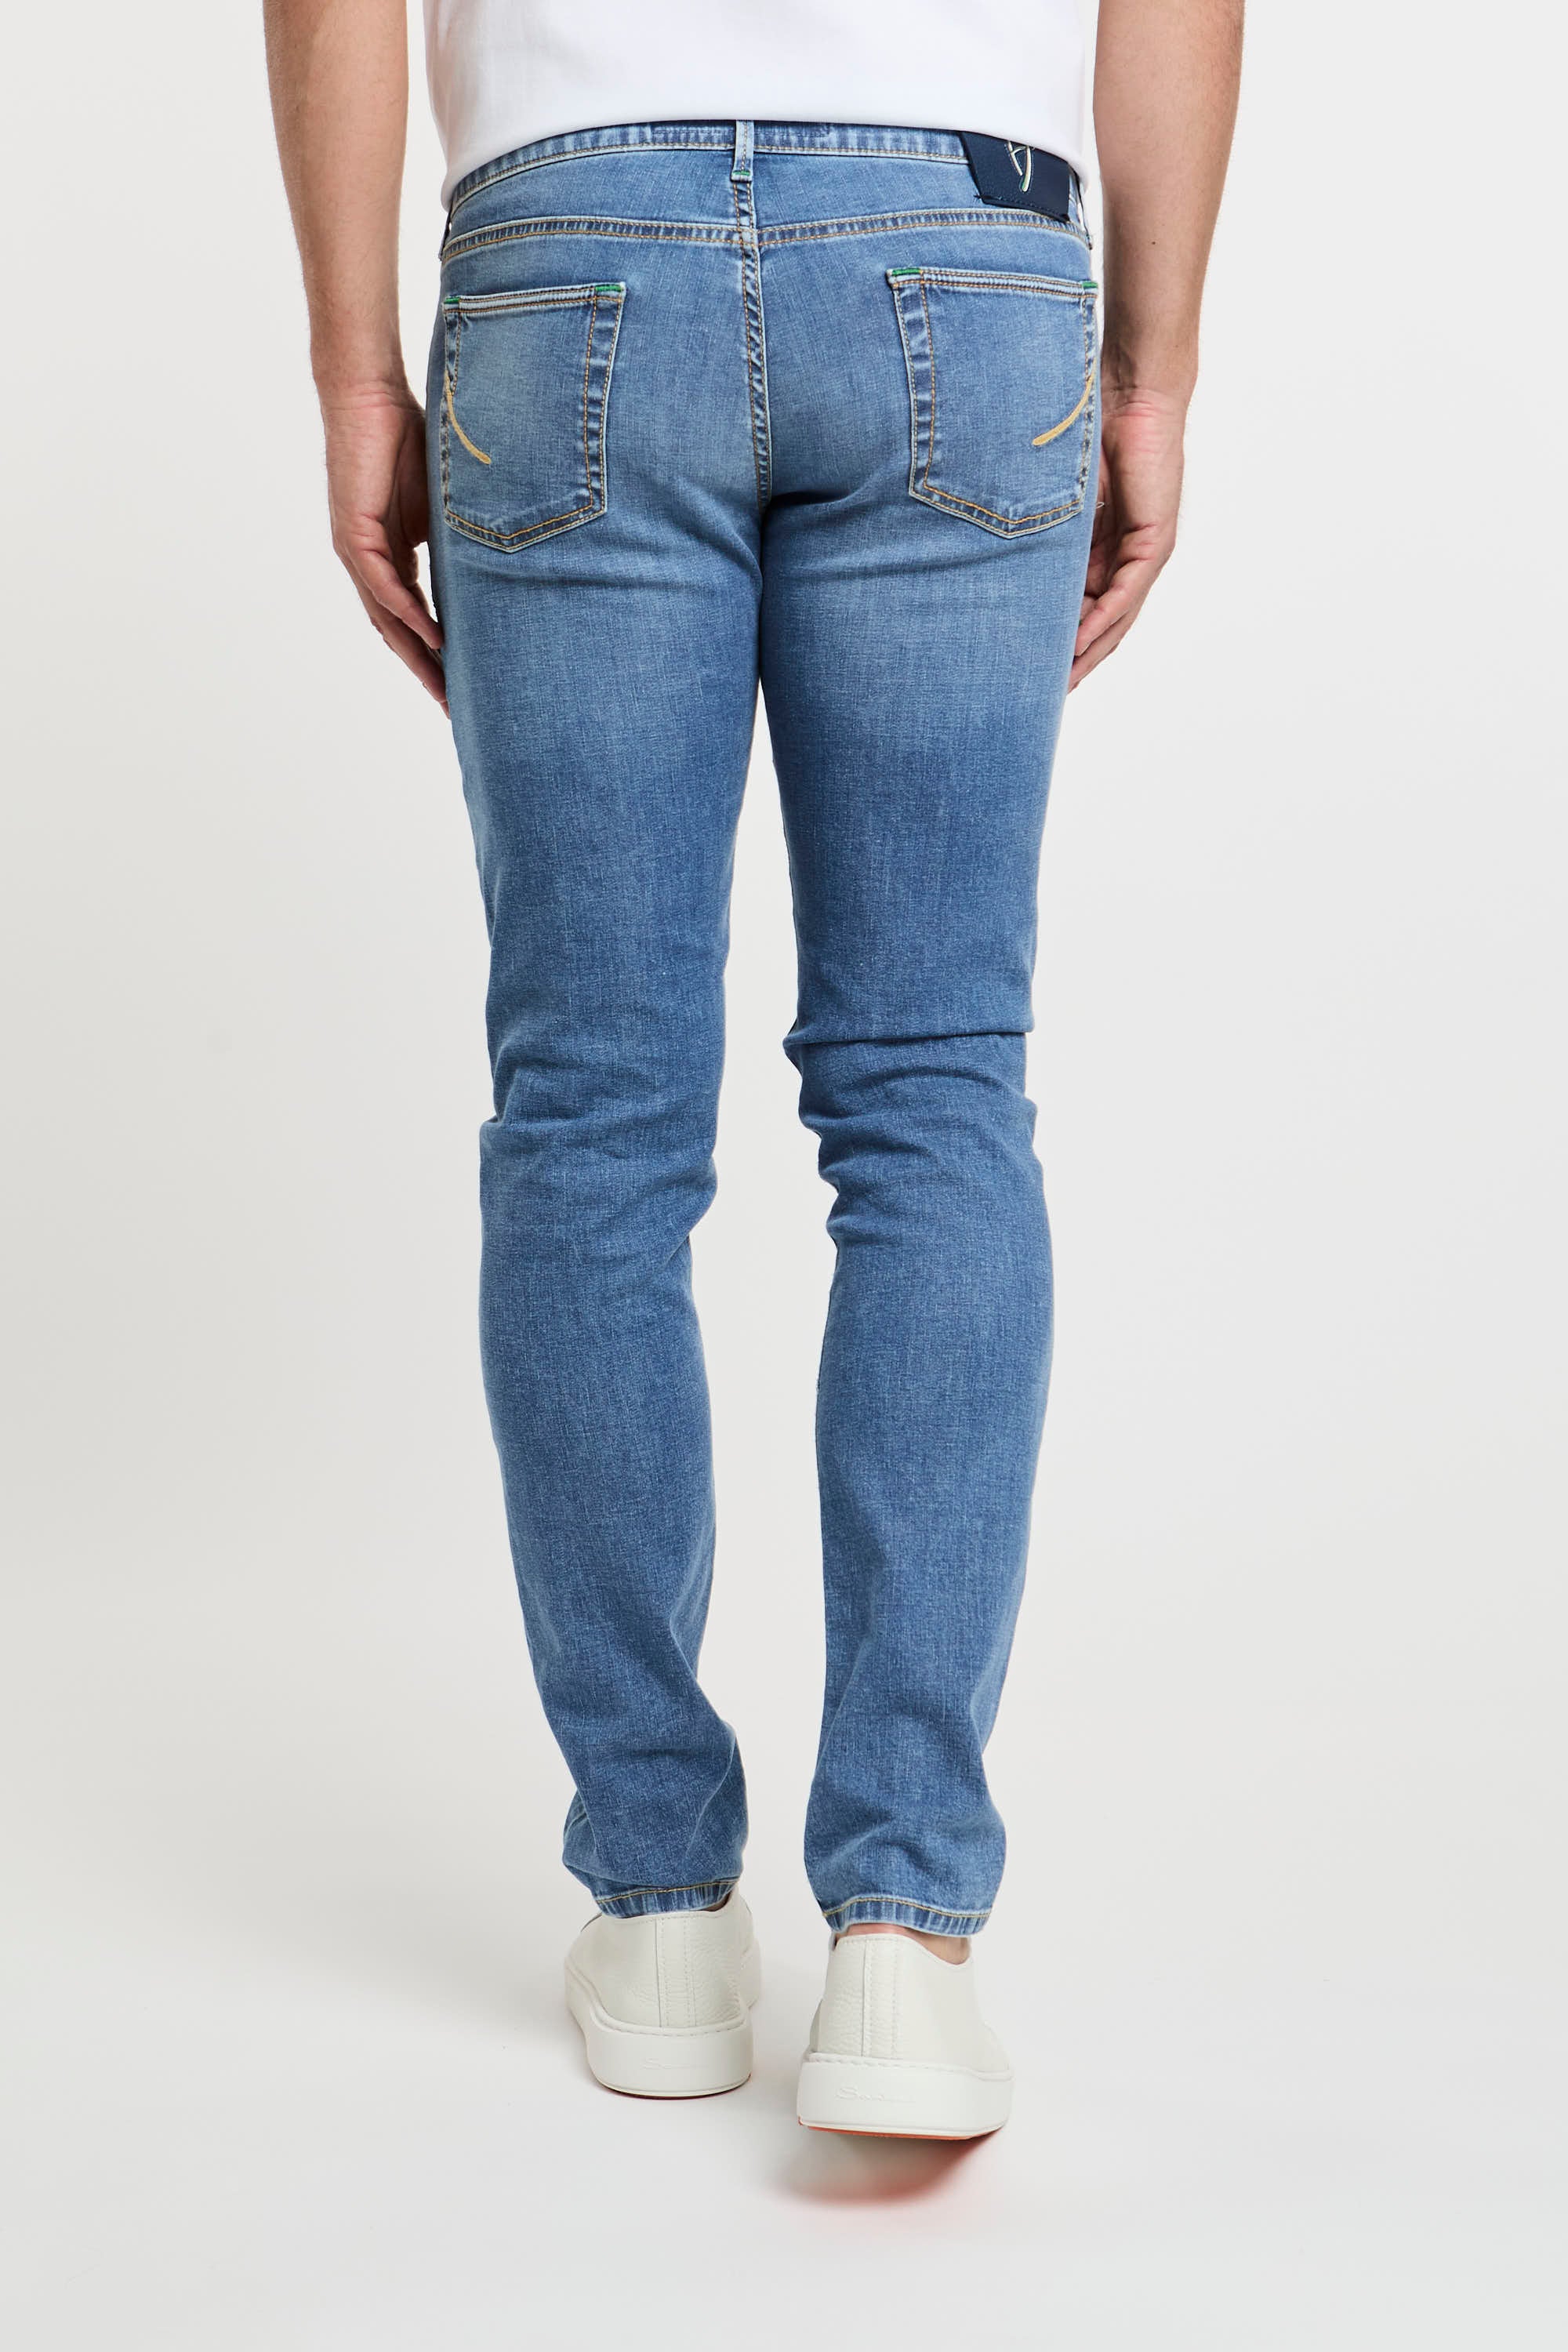 Handpicked Jeans Parma in Cotton Denim-5